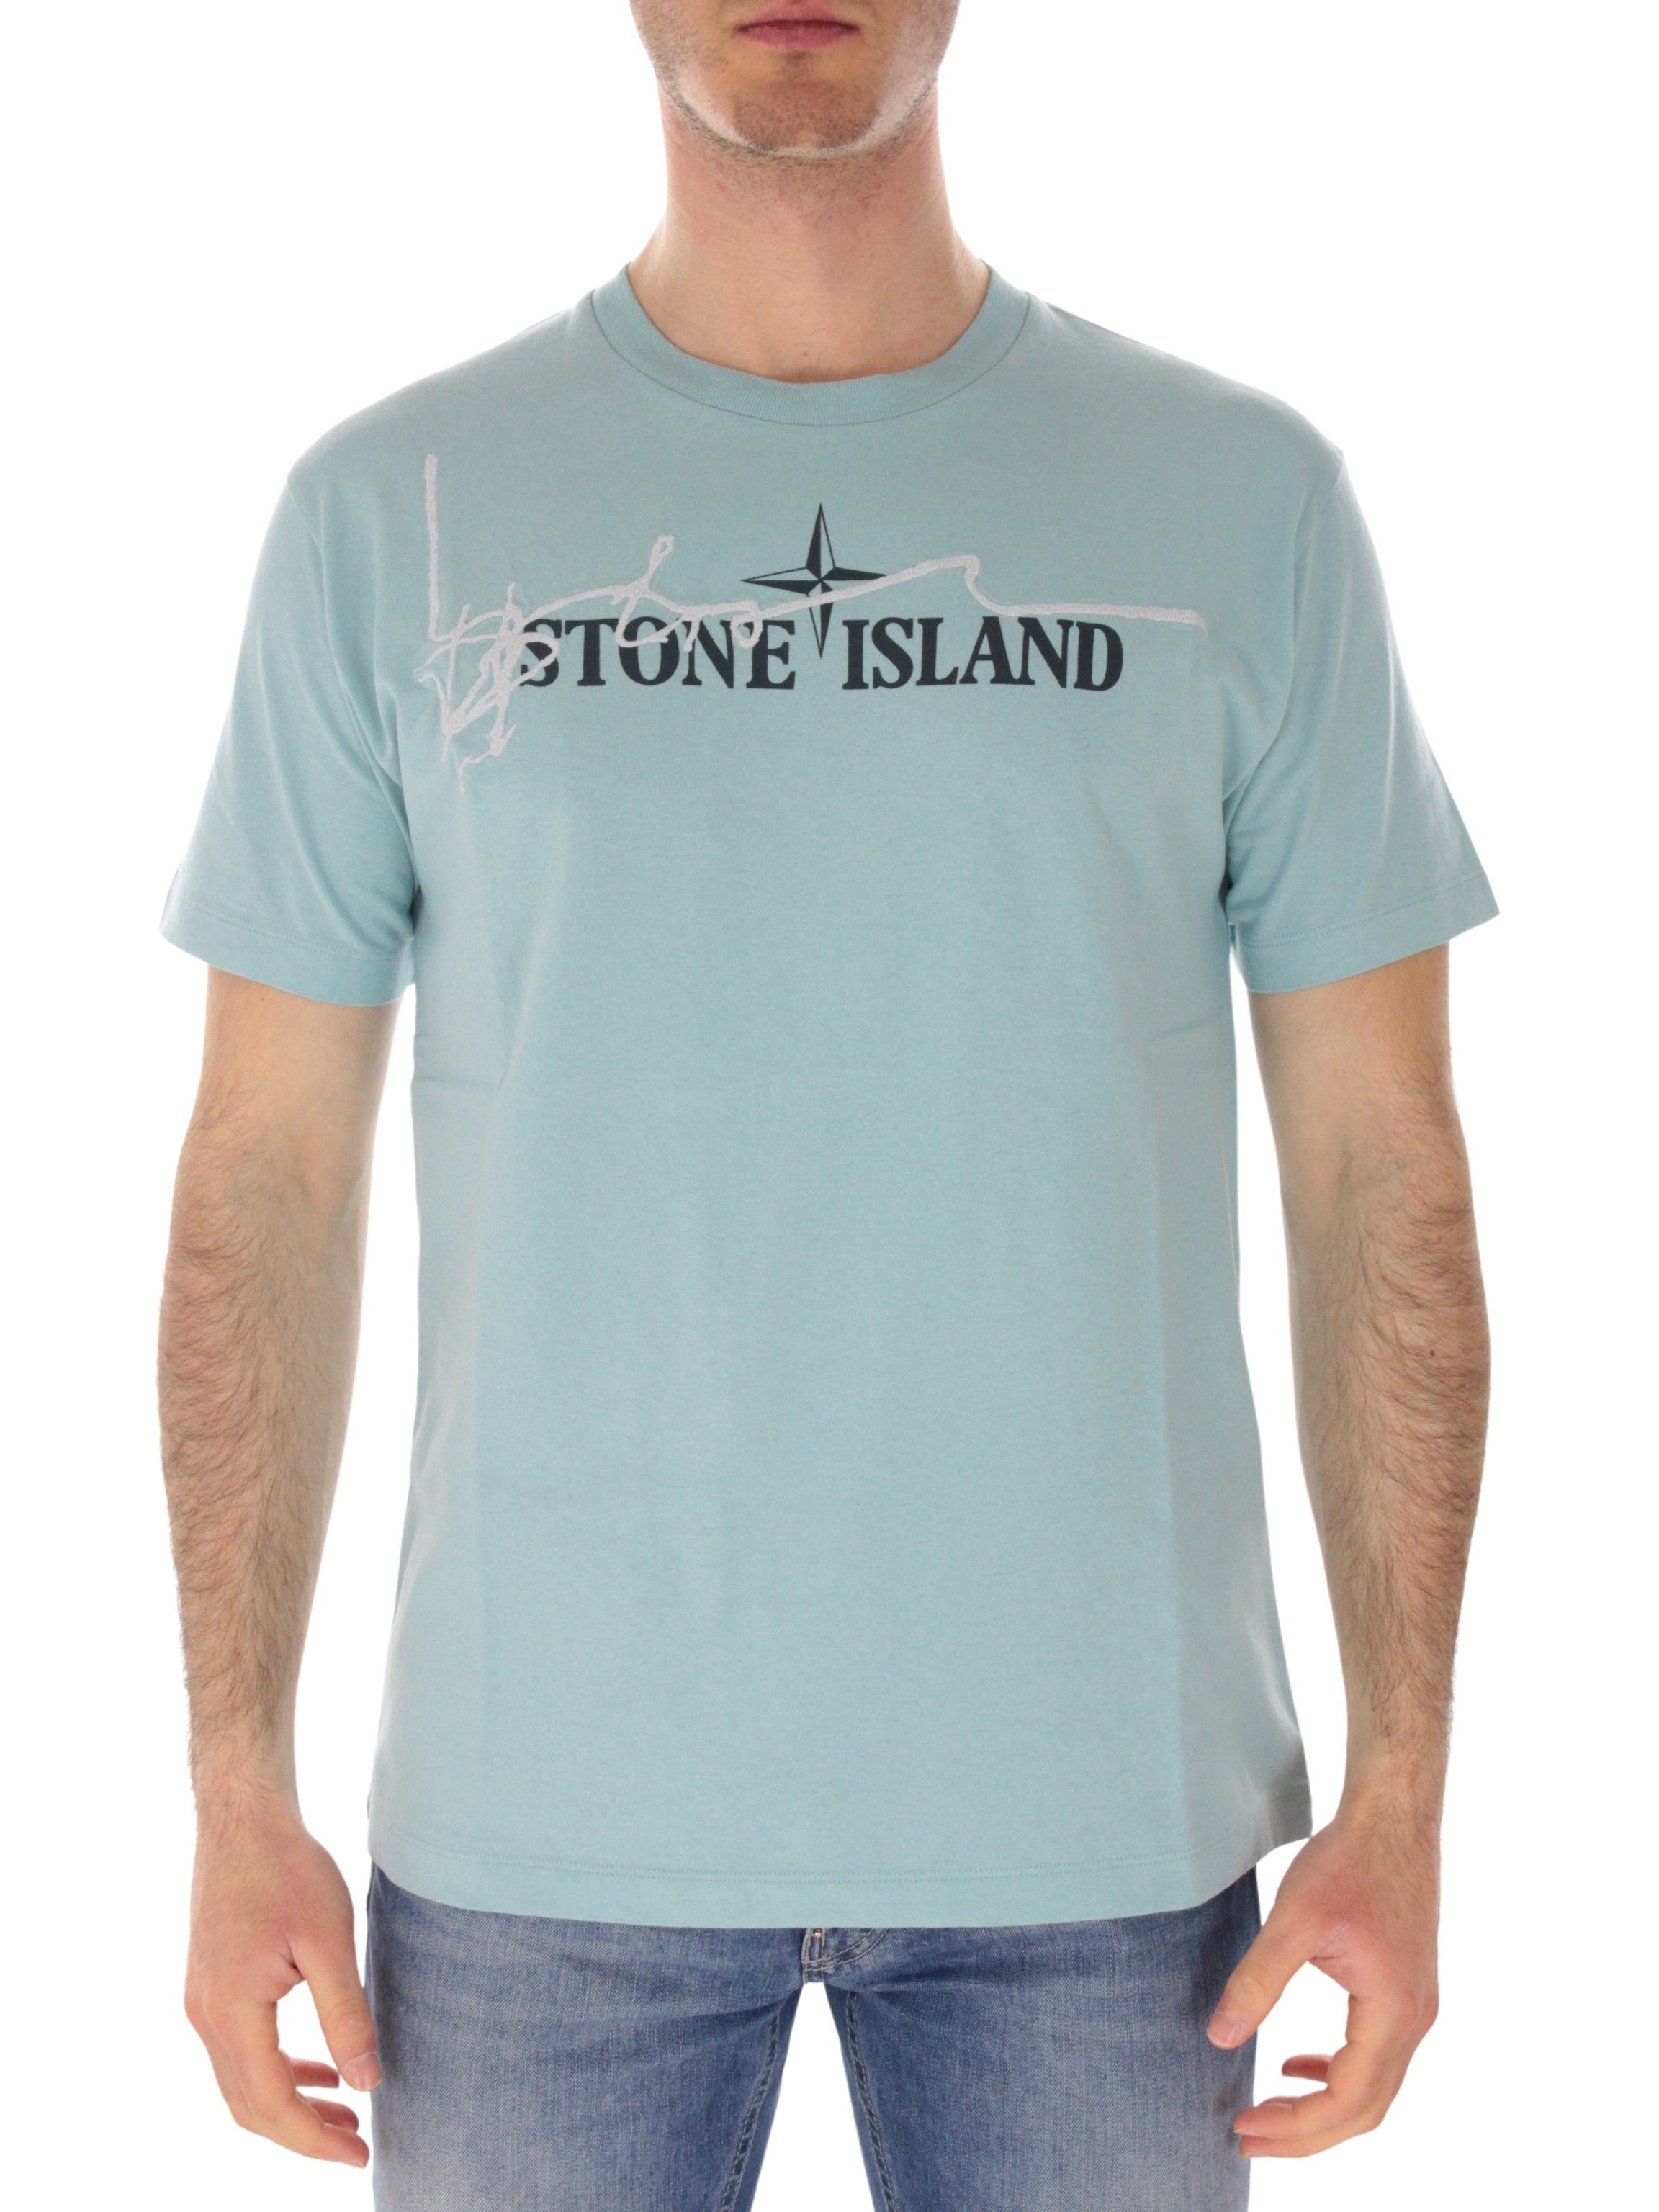 Stone island t-shirt